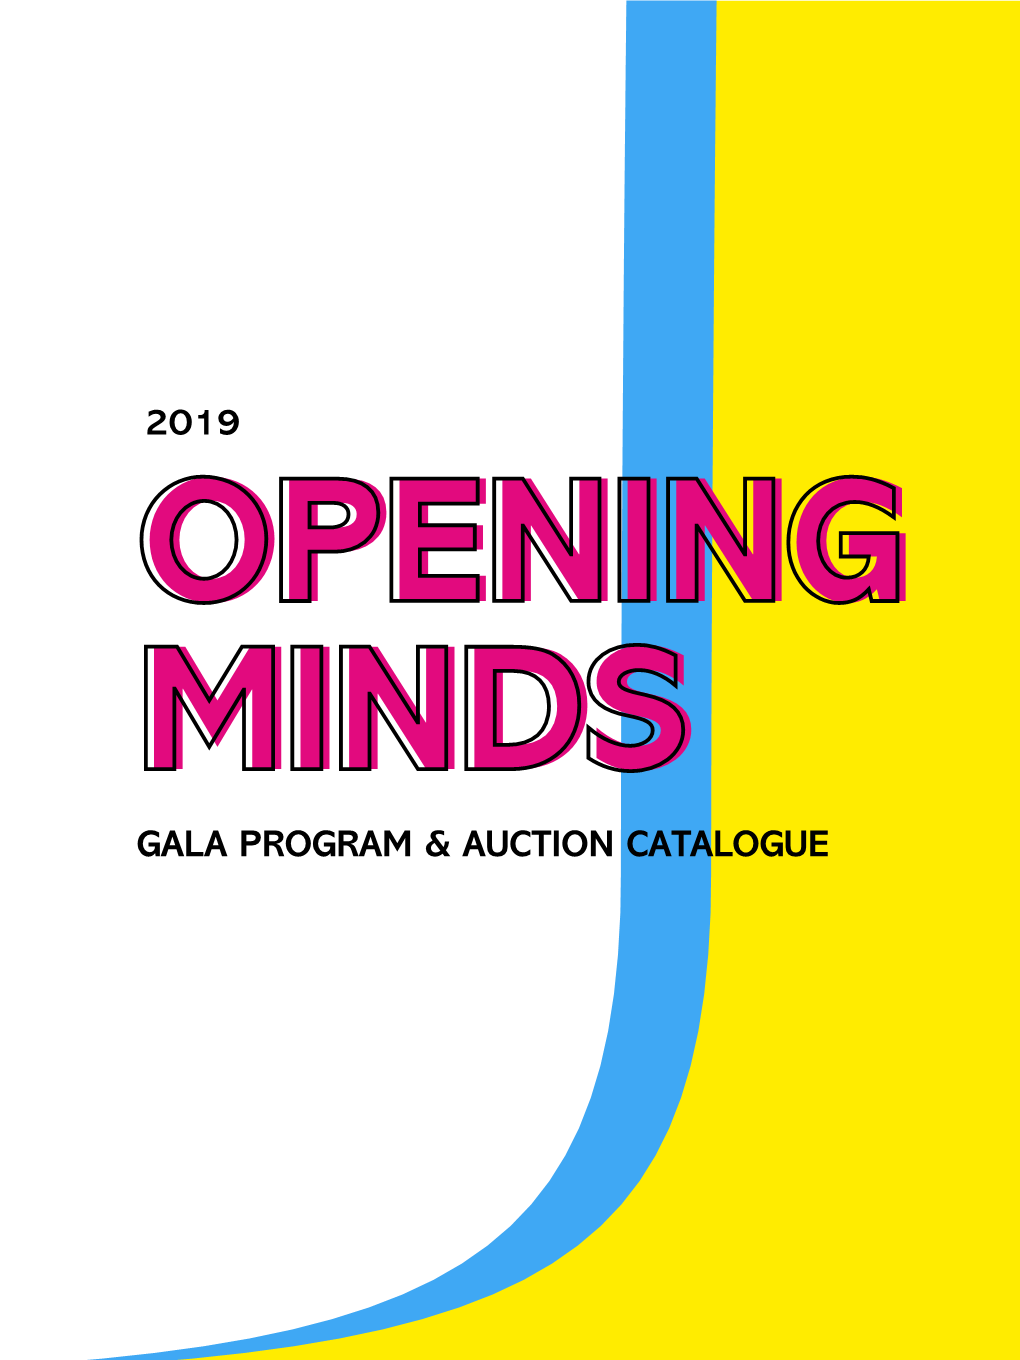 Gala Program & Auction Catalogue 2019